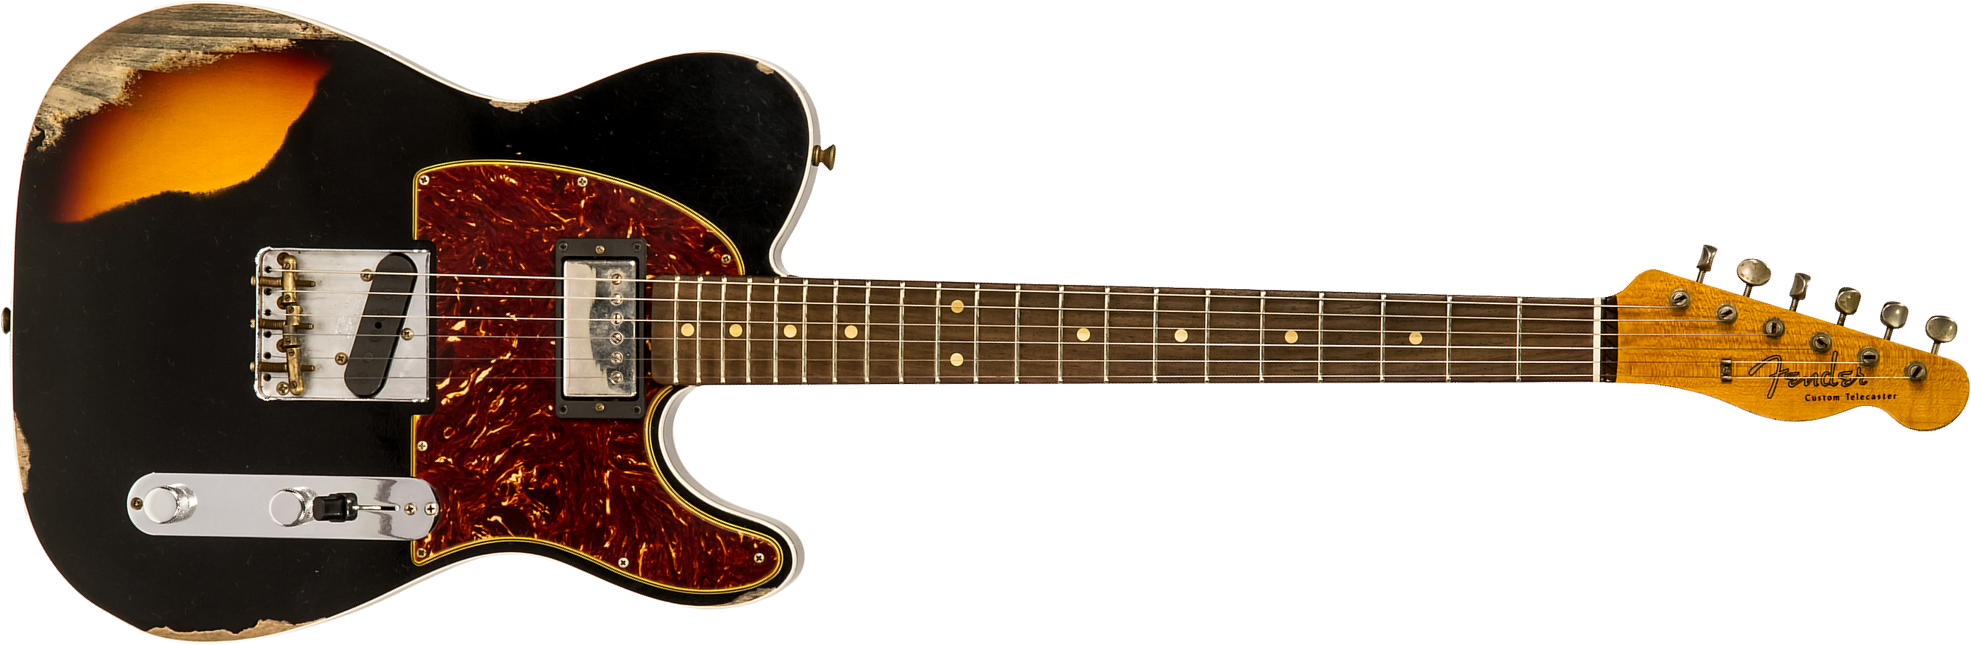 Fender Custom Shop Tele Custom 1960 Sh Ltd Hs Ht Rw #cz549784 - Heavy Relic Black Over 3-color Sunburst - Tel shape electric guitar - Main picture